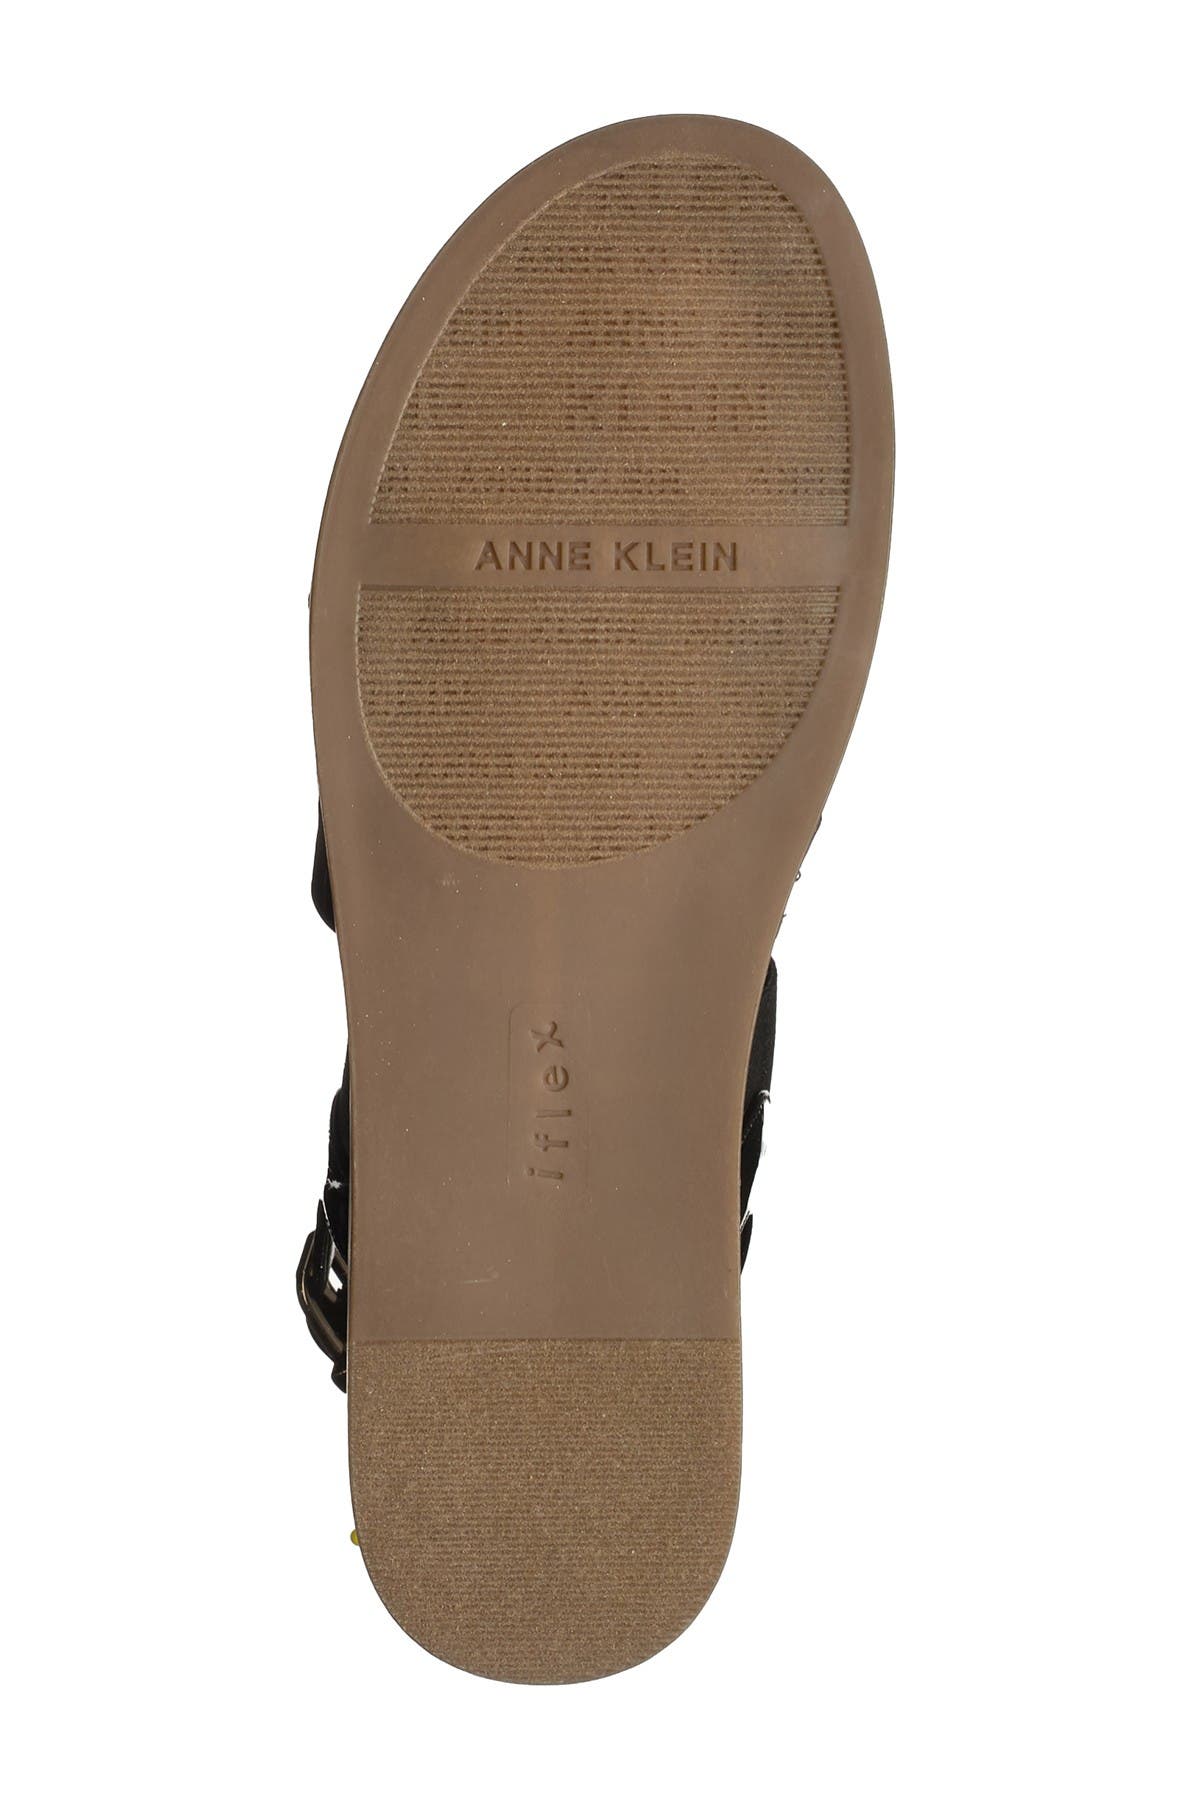 anne klein essence sandal